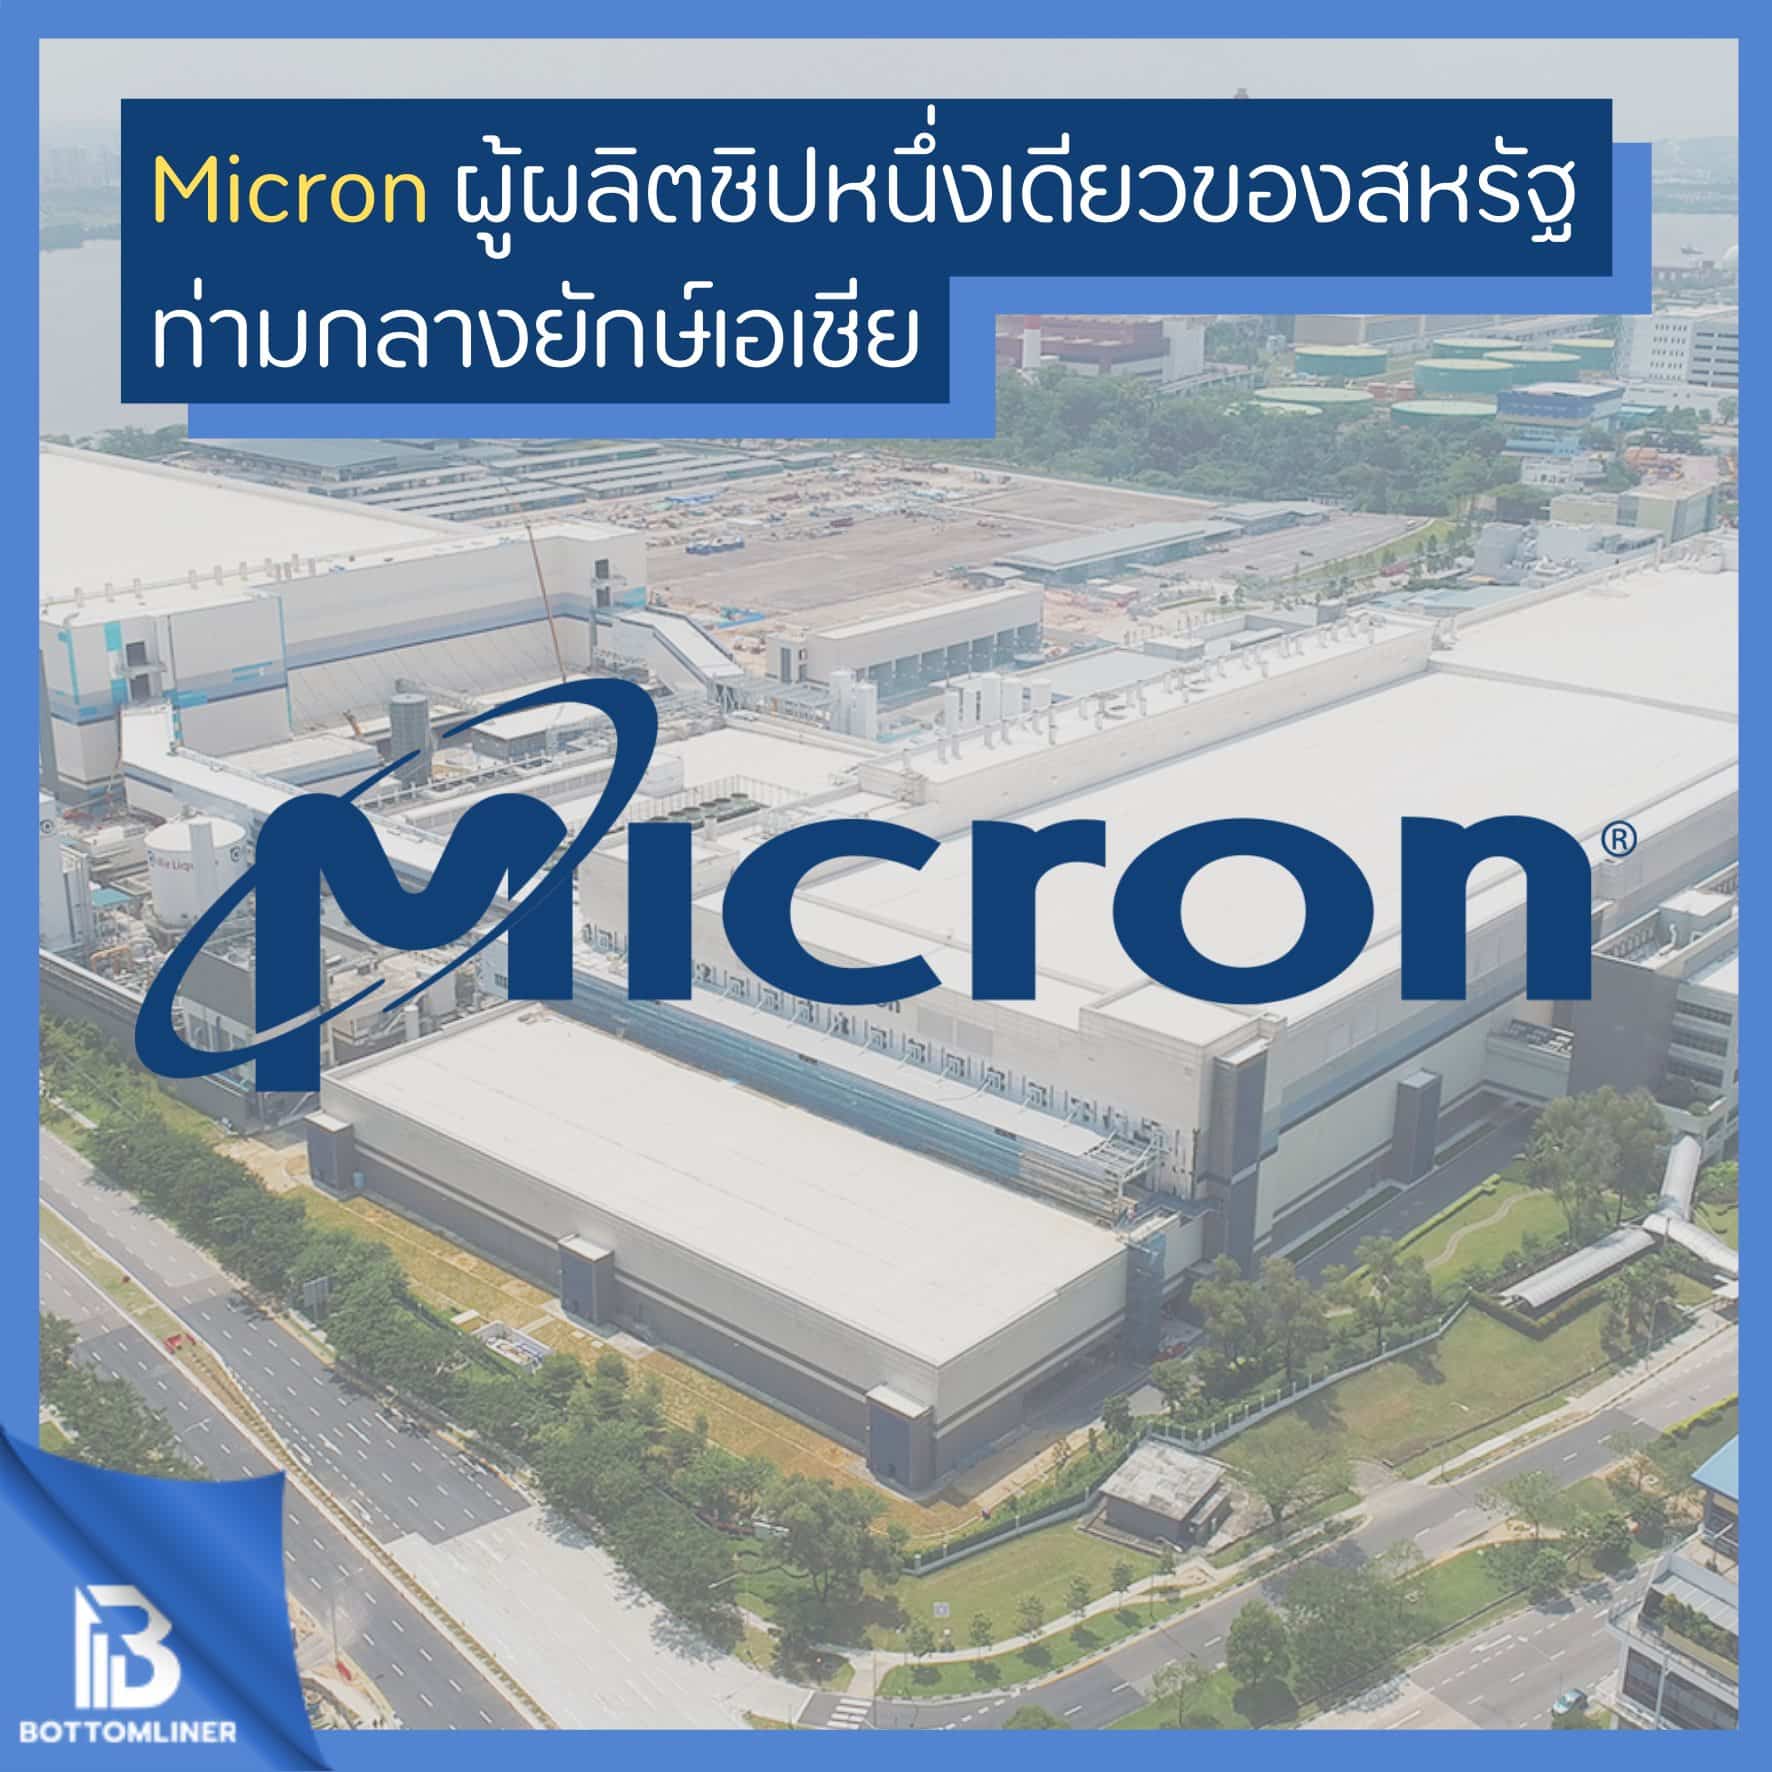 Micron ผู้ผลิตชิปหนึ่งเดียวของสหรัฐท่ามกลางยักษ์เอเชีย